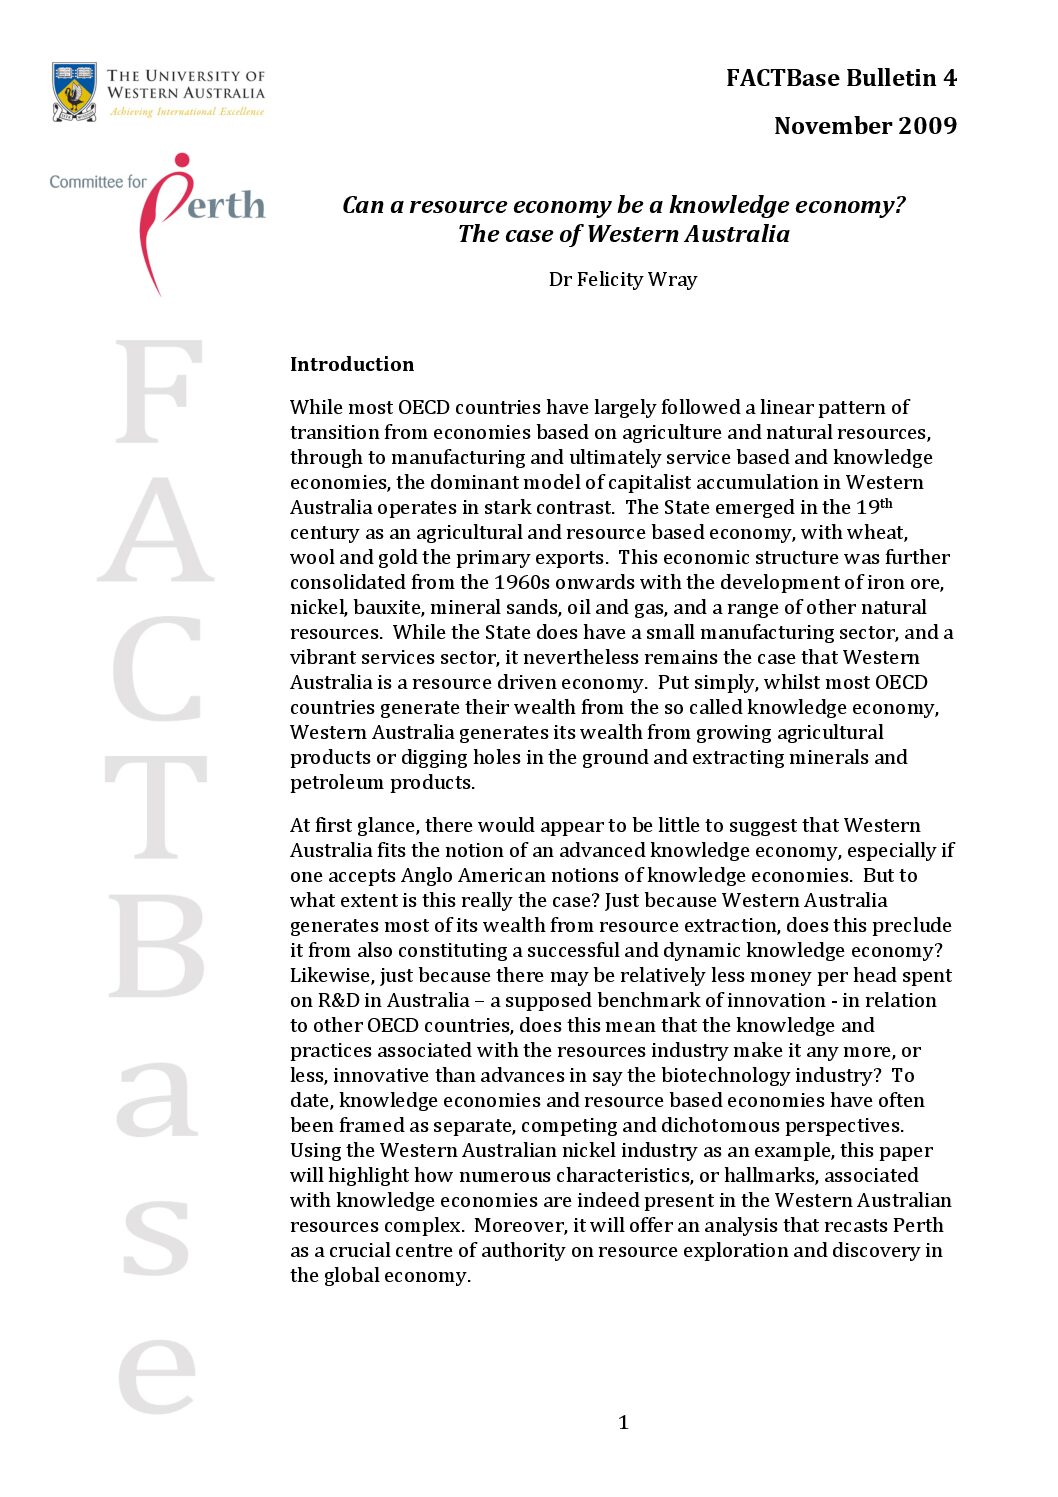 FACTBase Bulletin 4 - November 2009